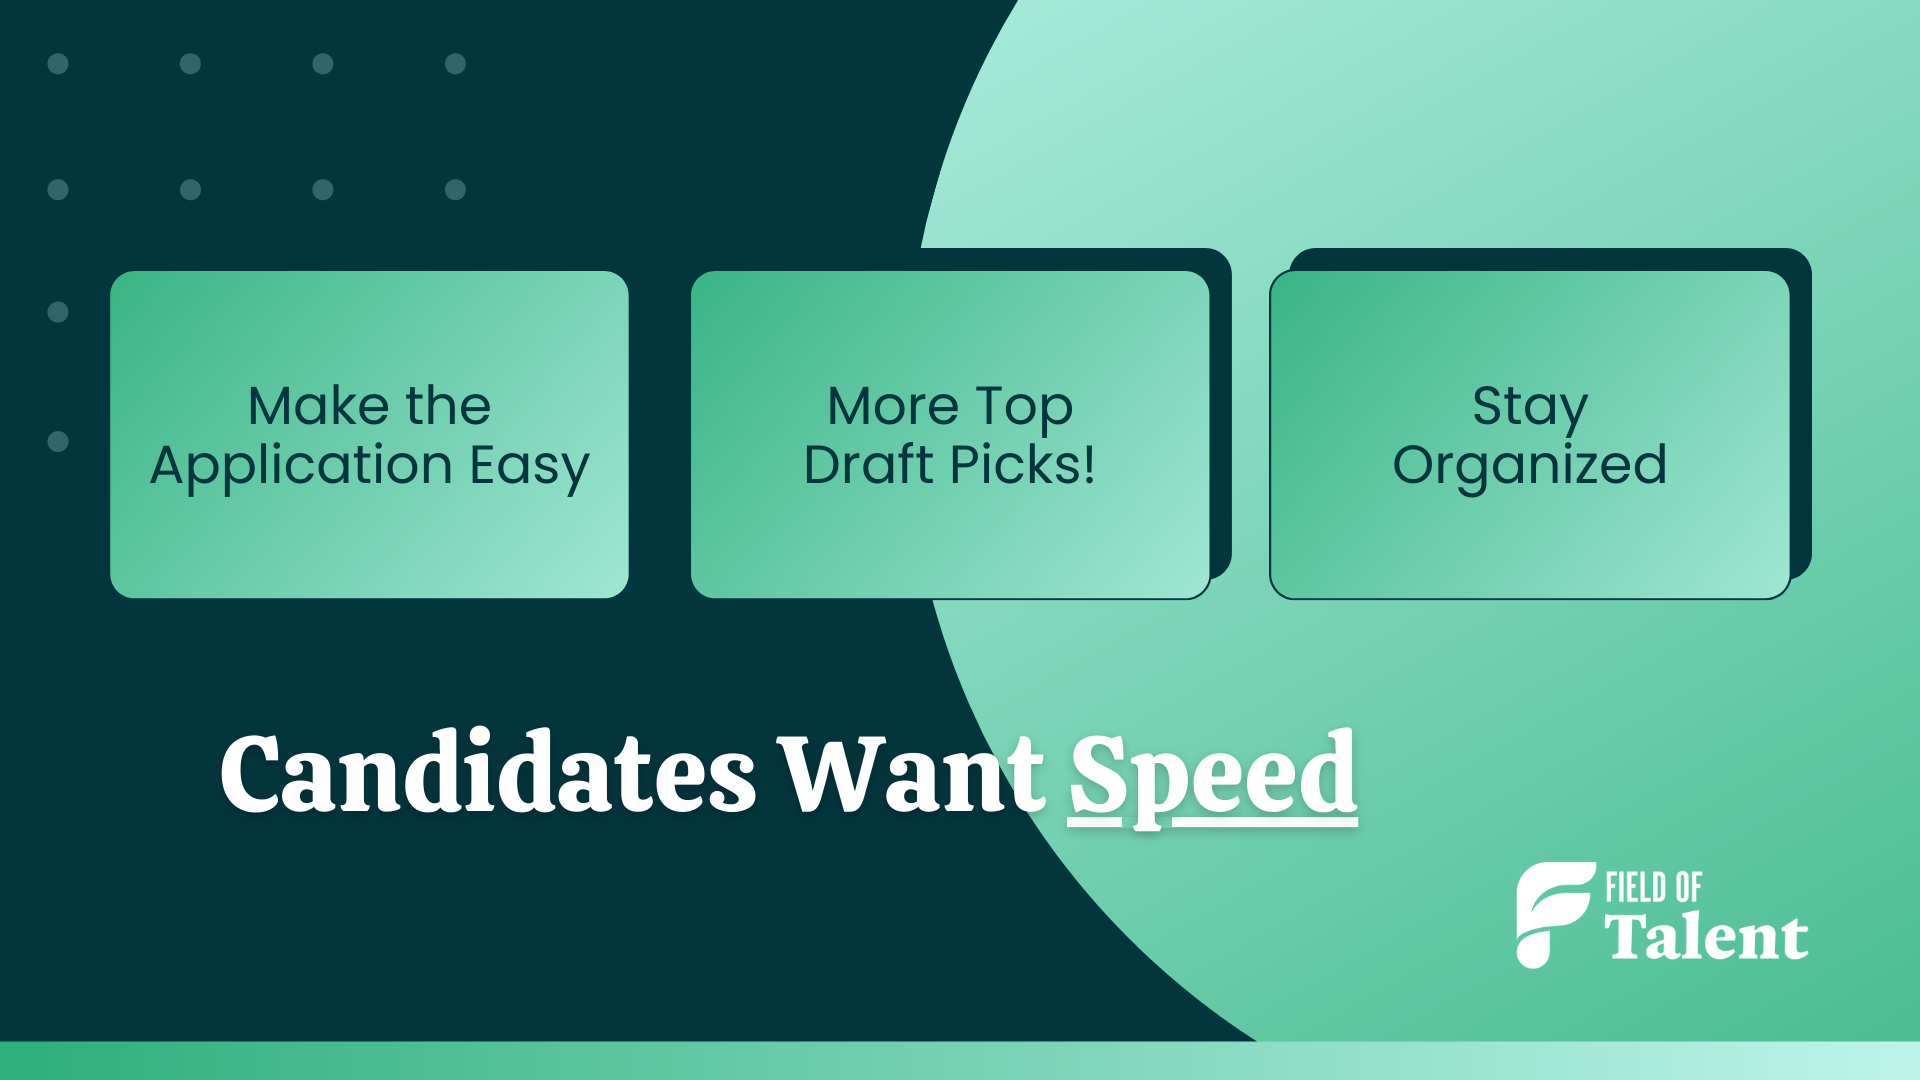 Job Candidates Want a Fast, Efficient Process